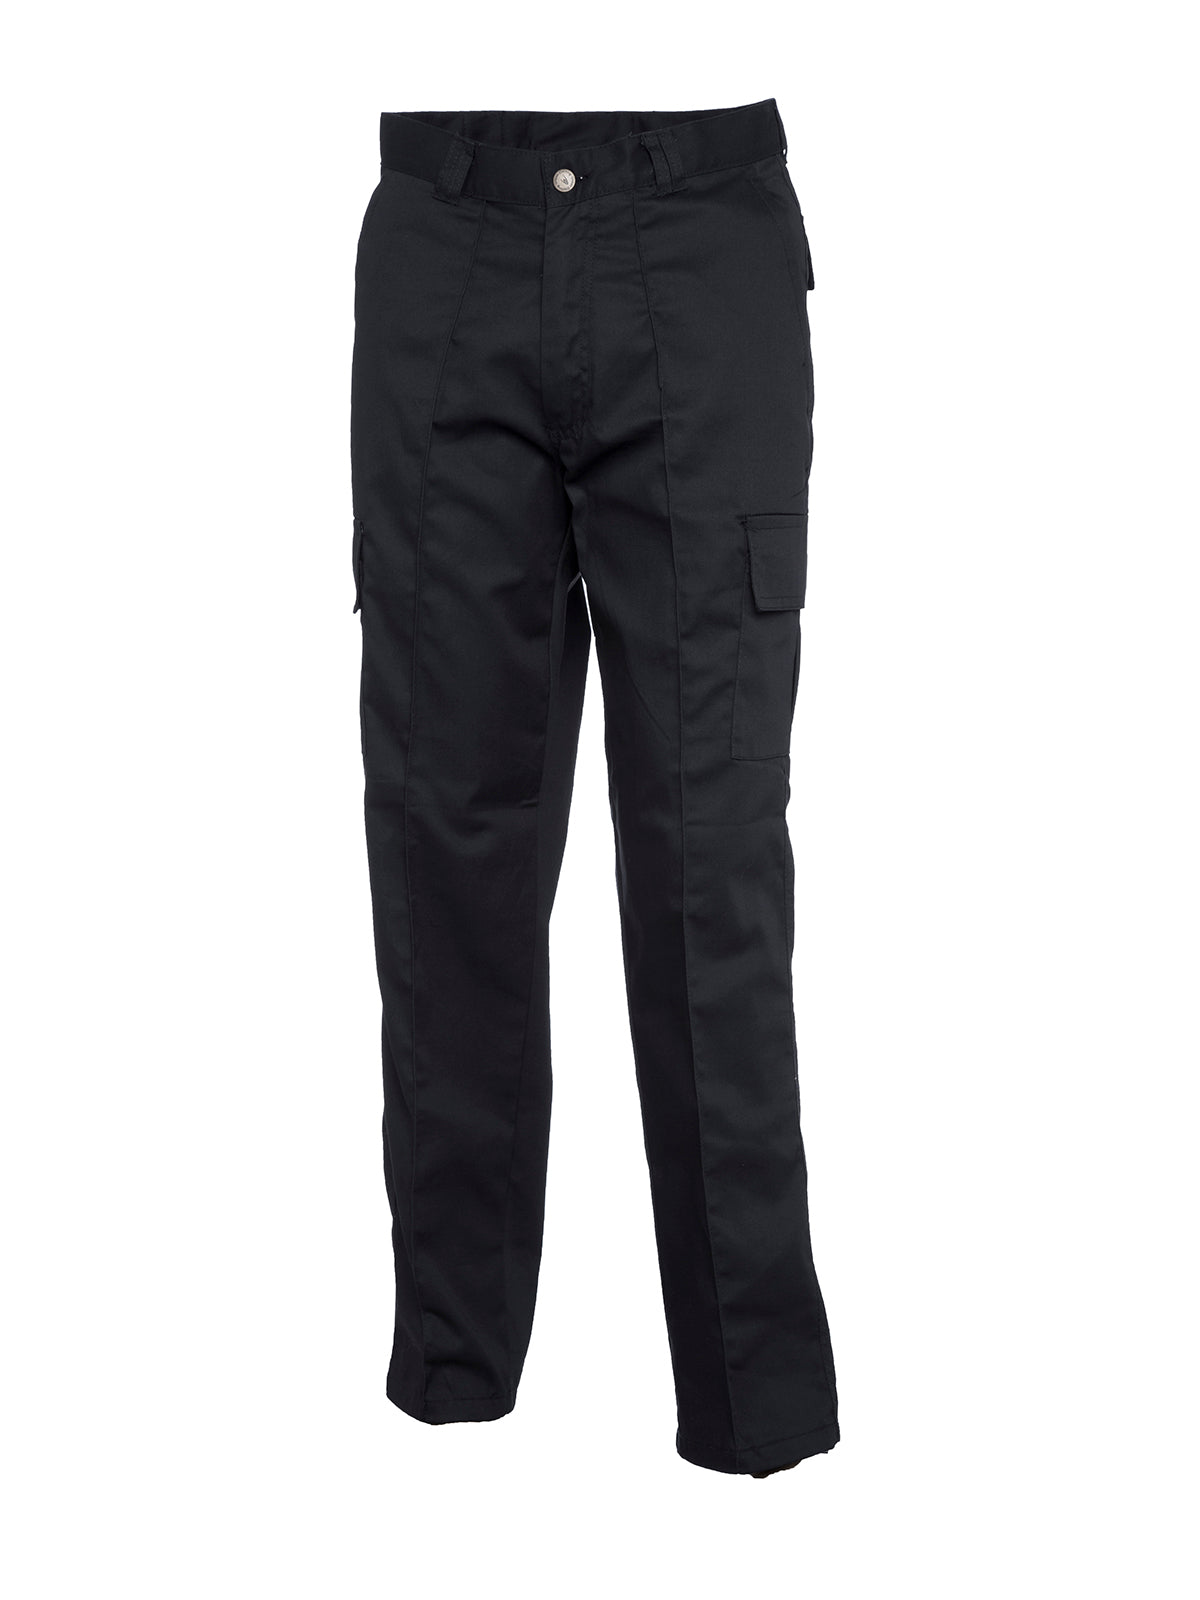 Uneek Cargo Trouser Short UC902S - Black